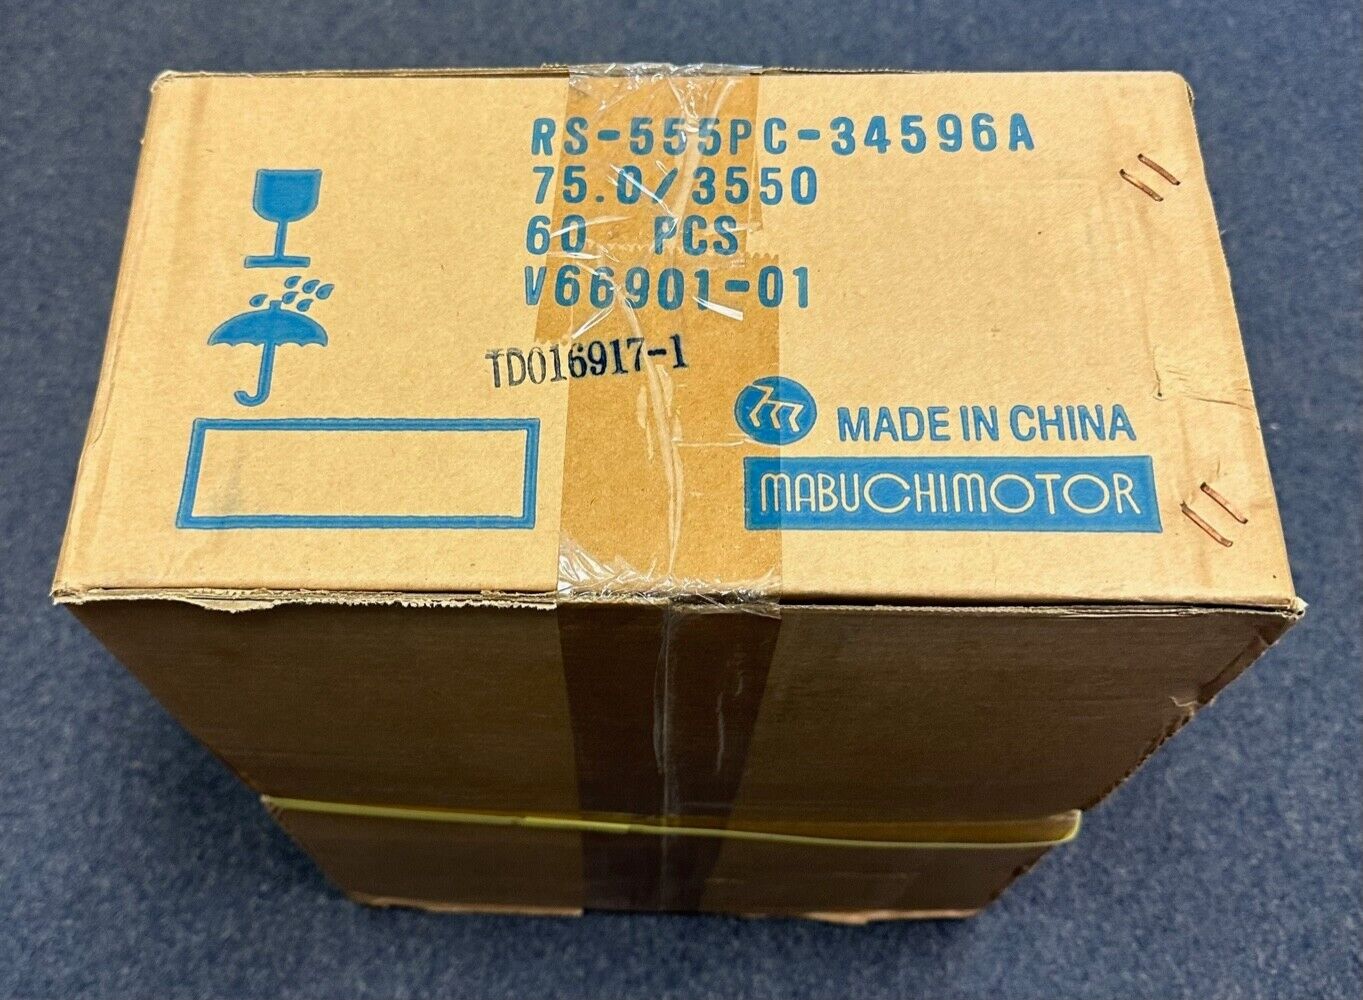 Mabuchi RS-555PC-3550 High Torque 12 VDC Motor 4800rpm -Unopened Box of 60